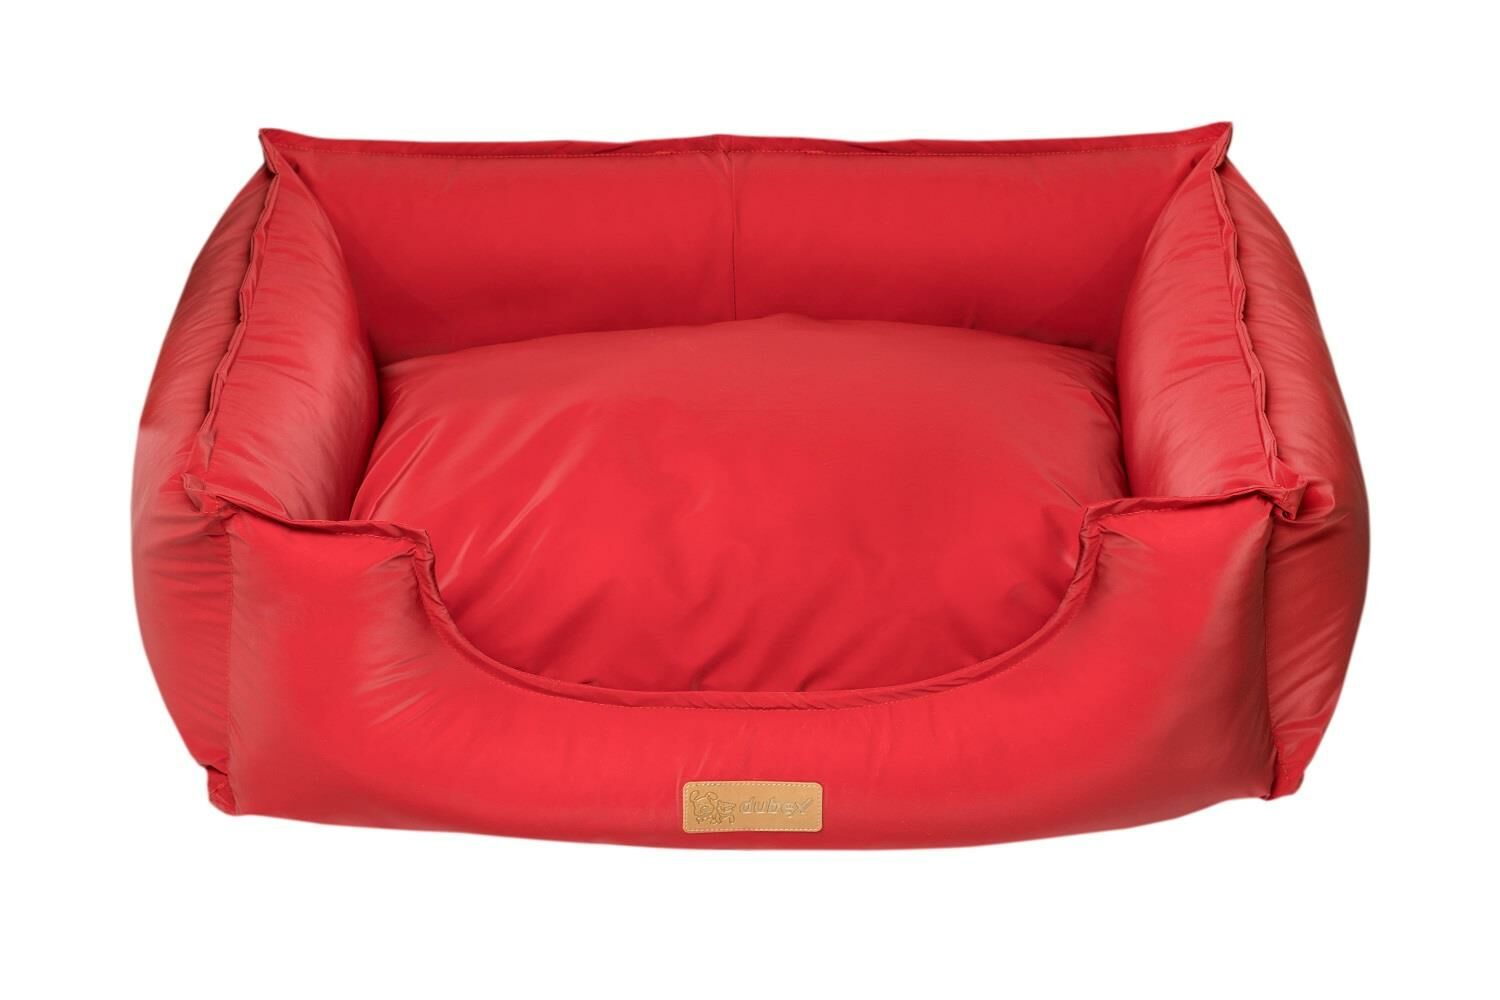 Dubex Premium Mochi Kedi Köpek Yatağı Kırmızı Large 95x75x28 cm